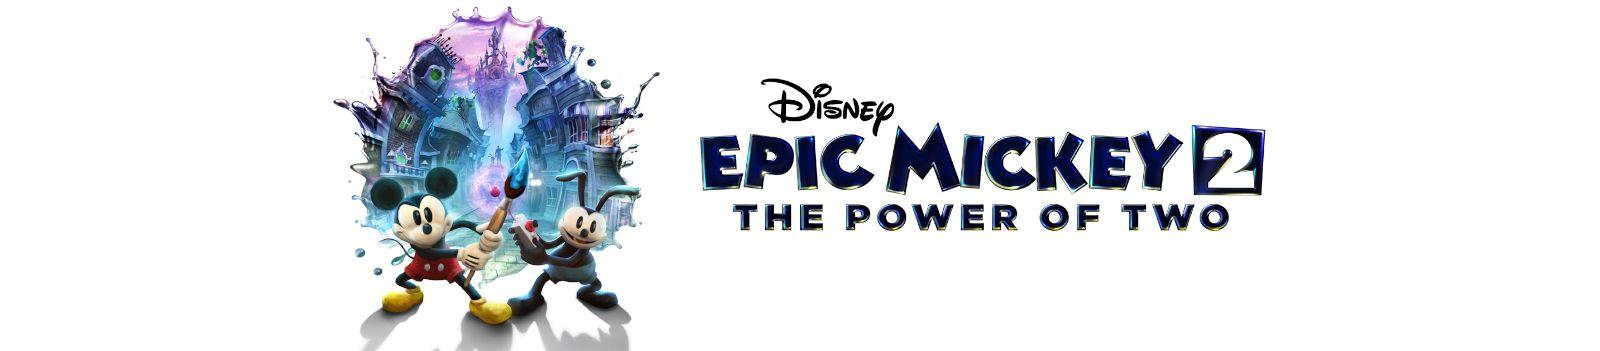 Epic Mickey 2 Logo - Etisalat UAE | Disney Epic Mickey2